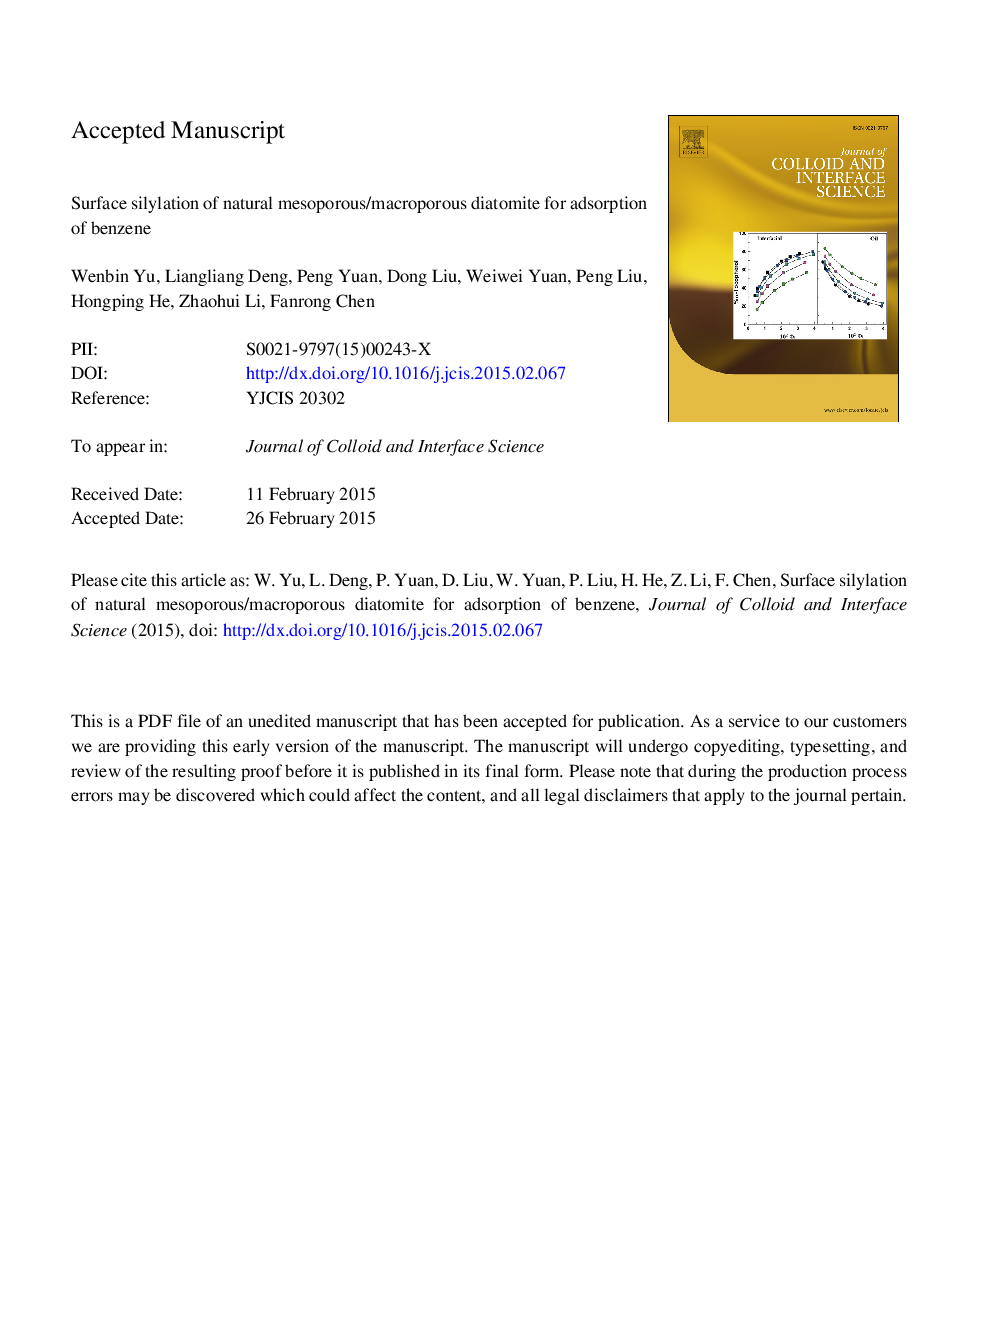 Surface silylation of natural mesoporous/macroporous diatomite for adsorption of benzene